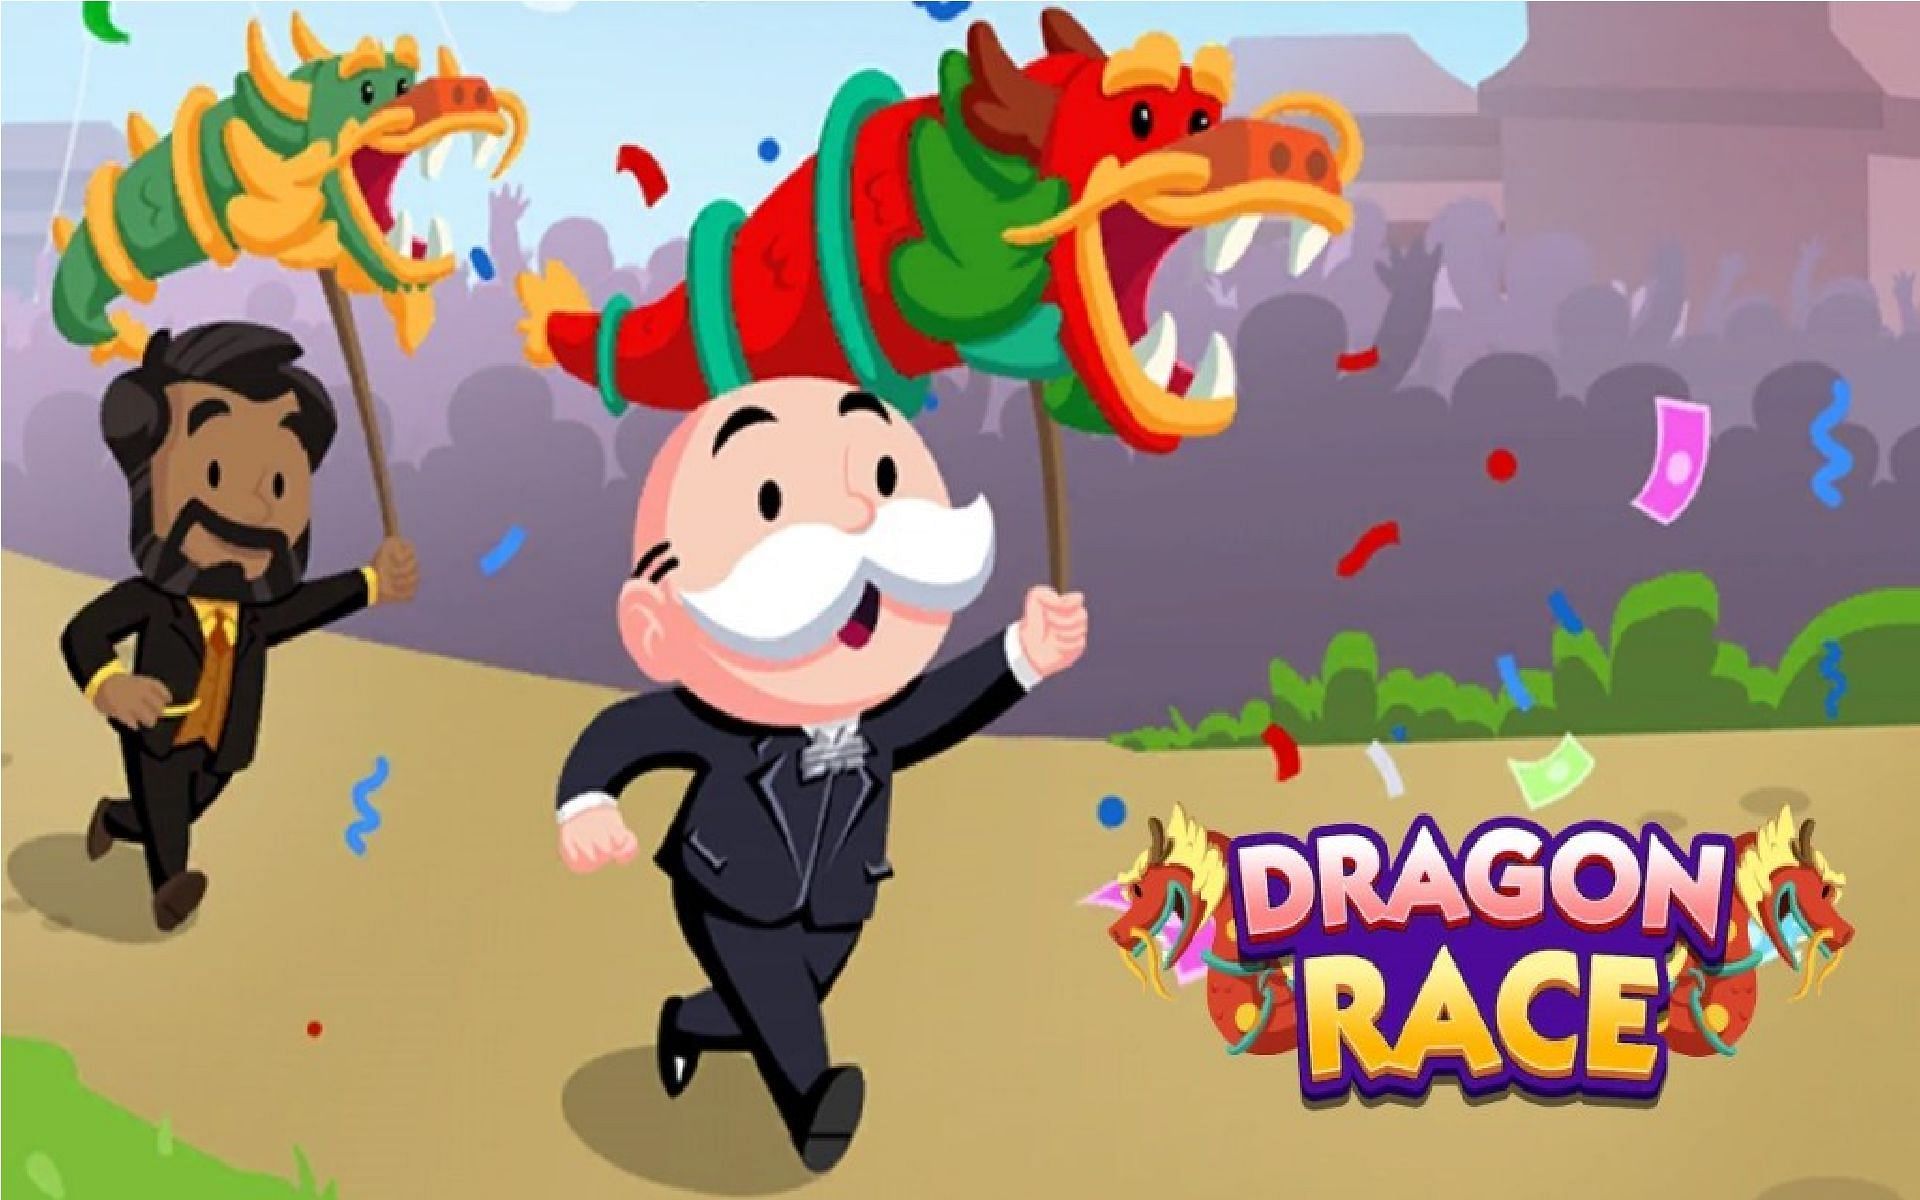 Monopoly Go Dragon Race rewards